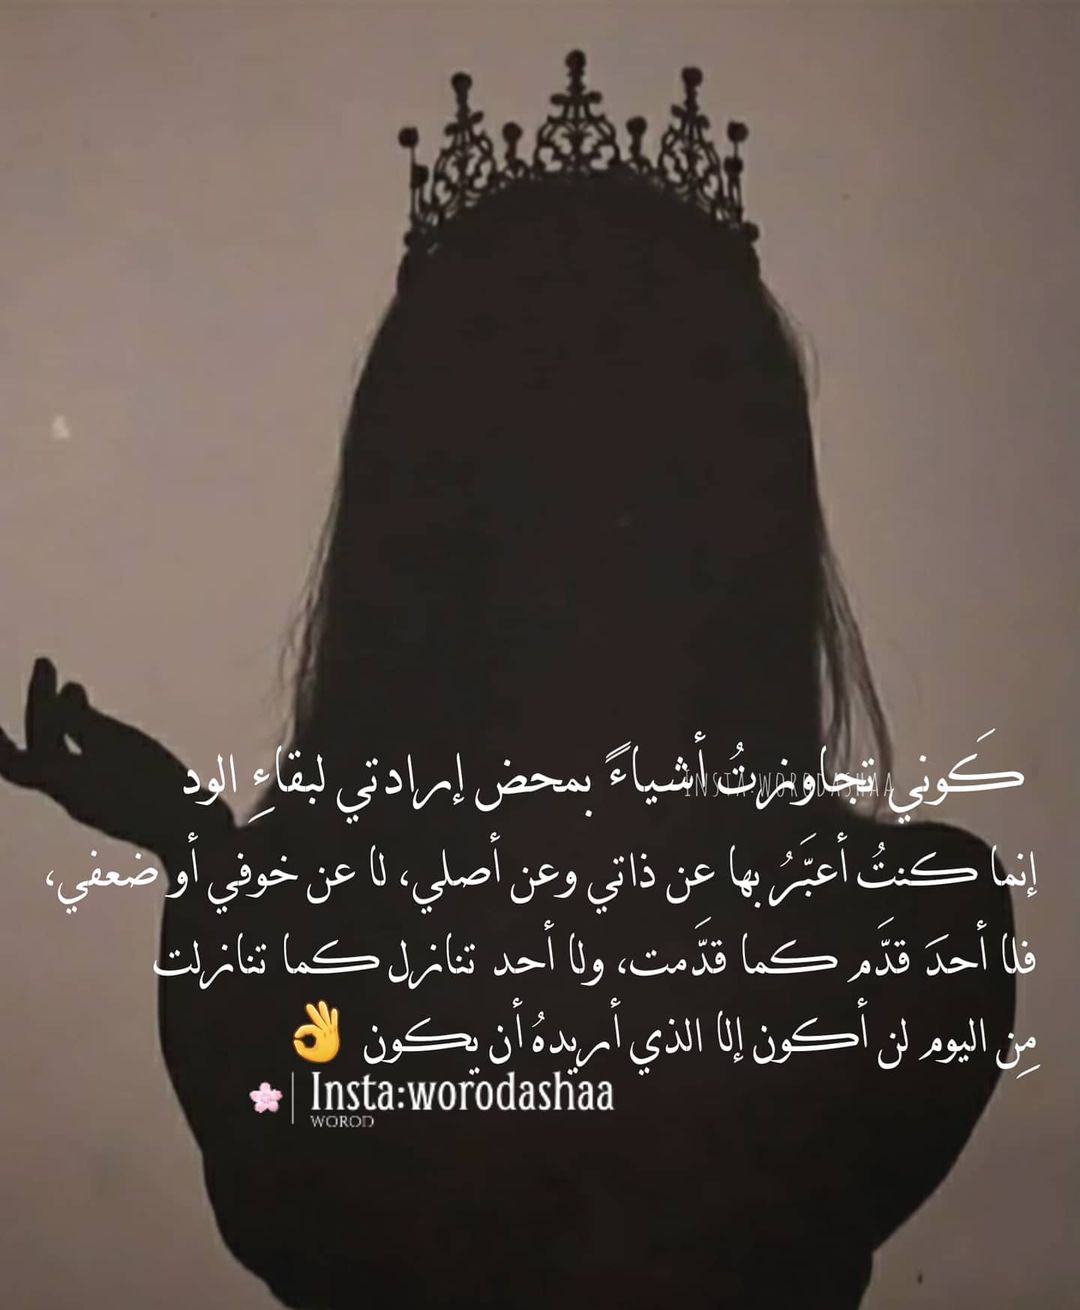 Arabic Caption with Beautiful Unique DP